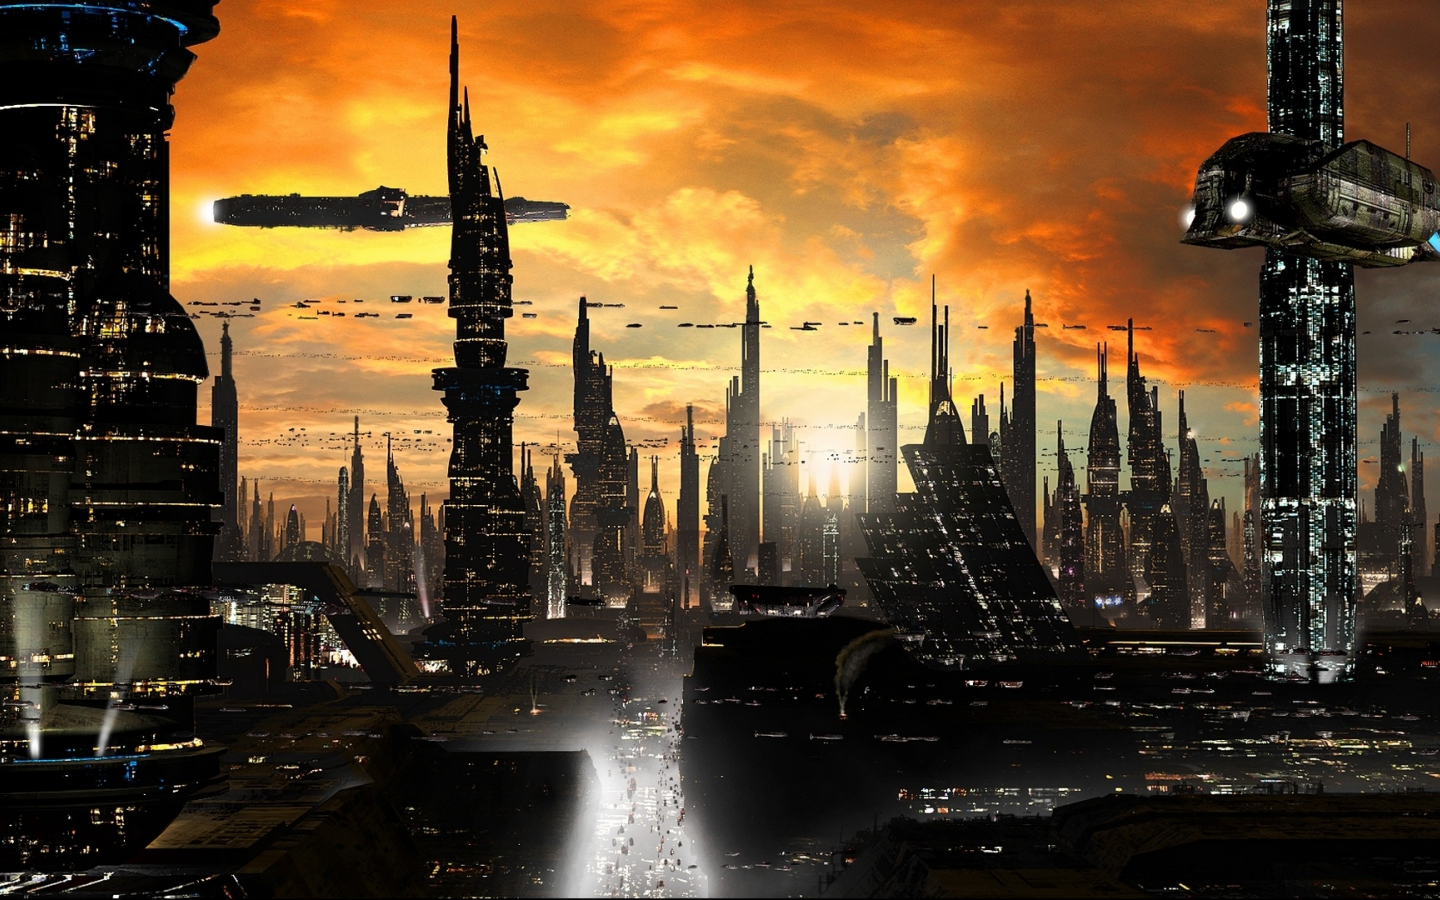 ships, sci-fi, Futuristic city 1, towers, cityscape, planet, rich35211, scott richard